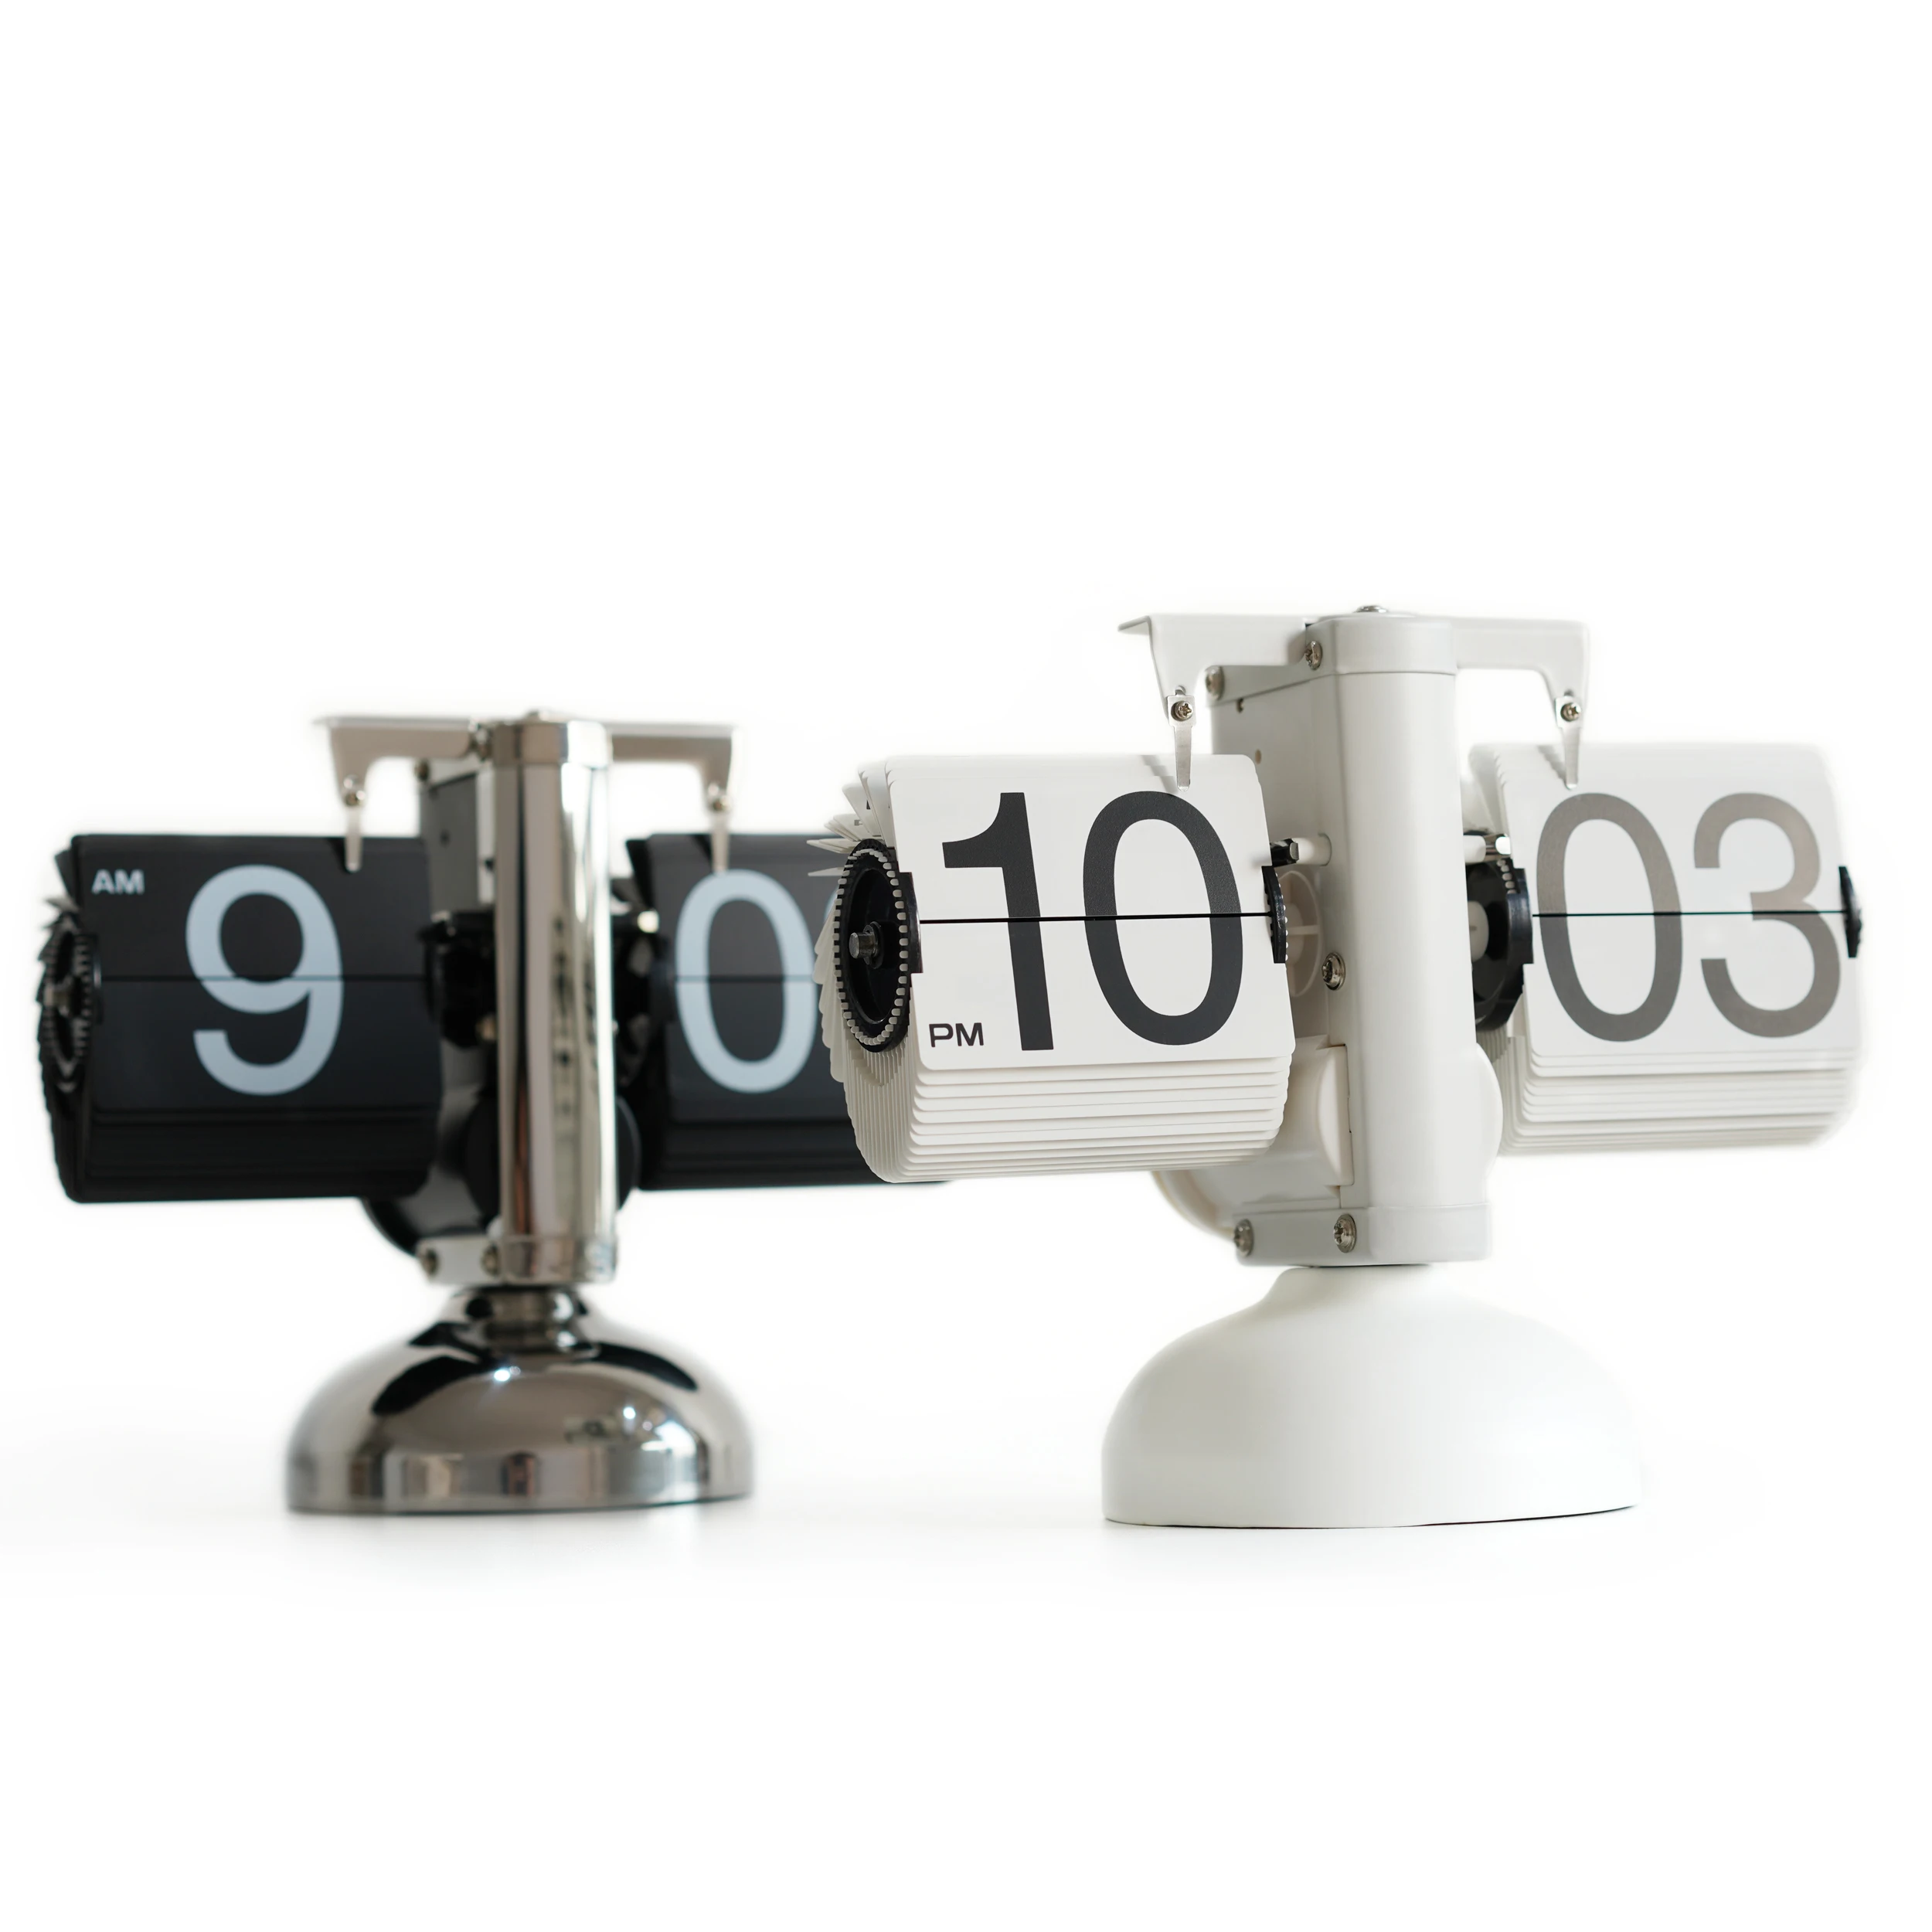 

2021 F001 Mode AM/Display Modern Scale Design Auto Flip Calendar Table Clock For Office School Home Desk Clock